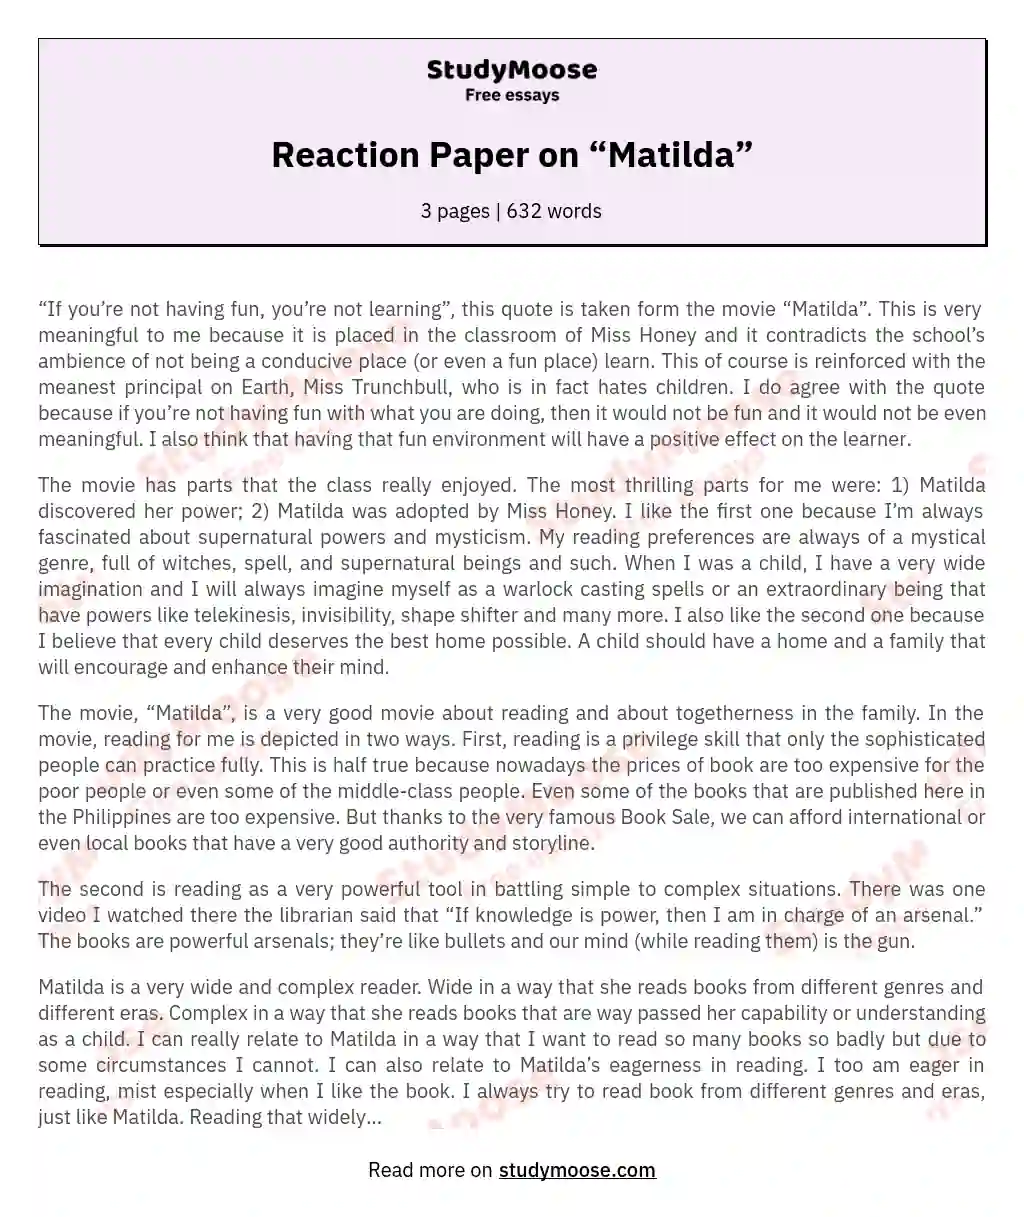 Reaction Paper on “Matilda” essay